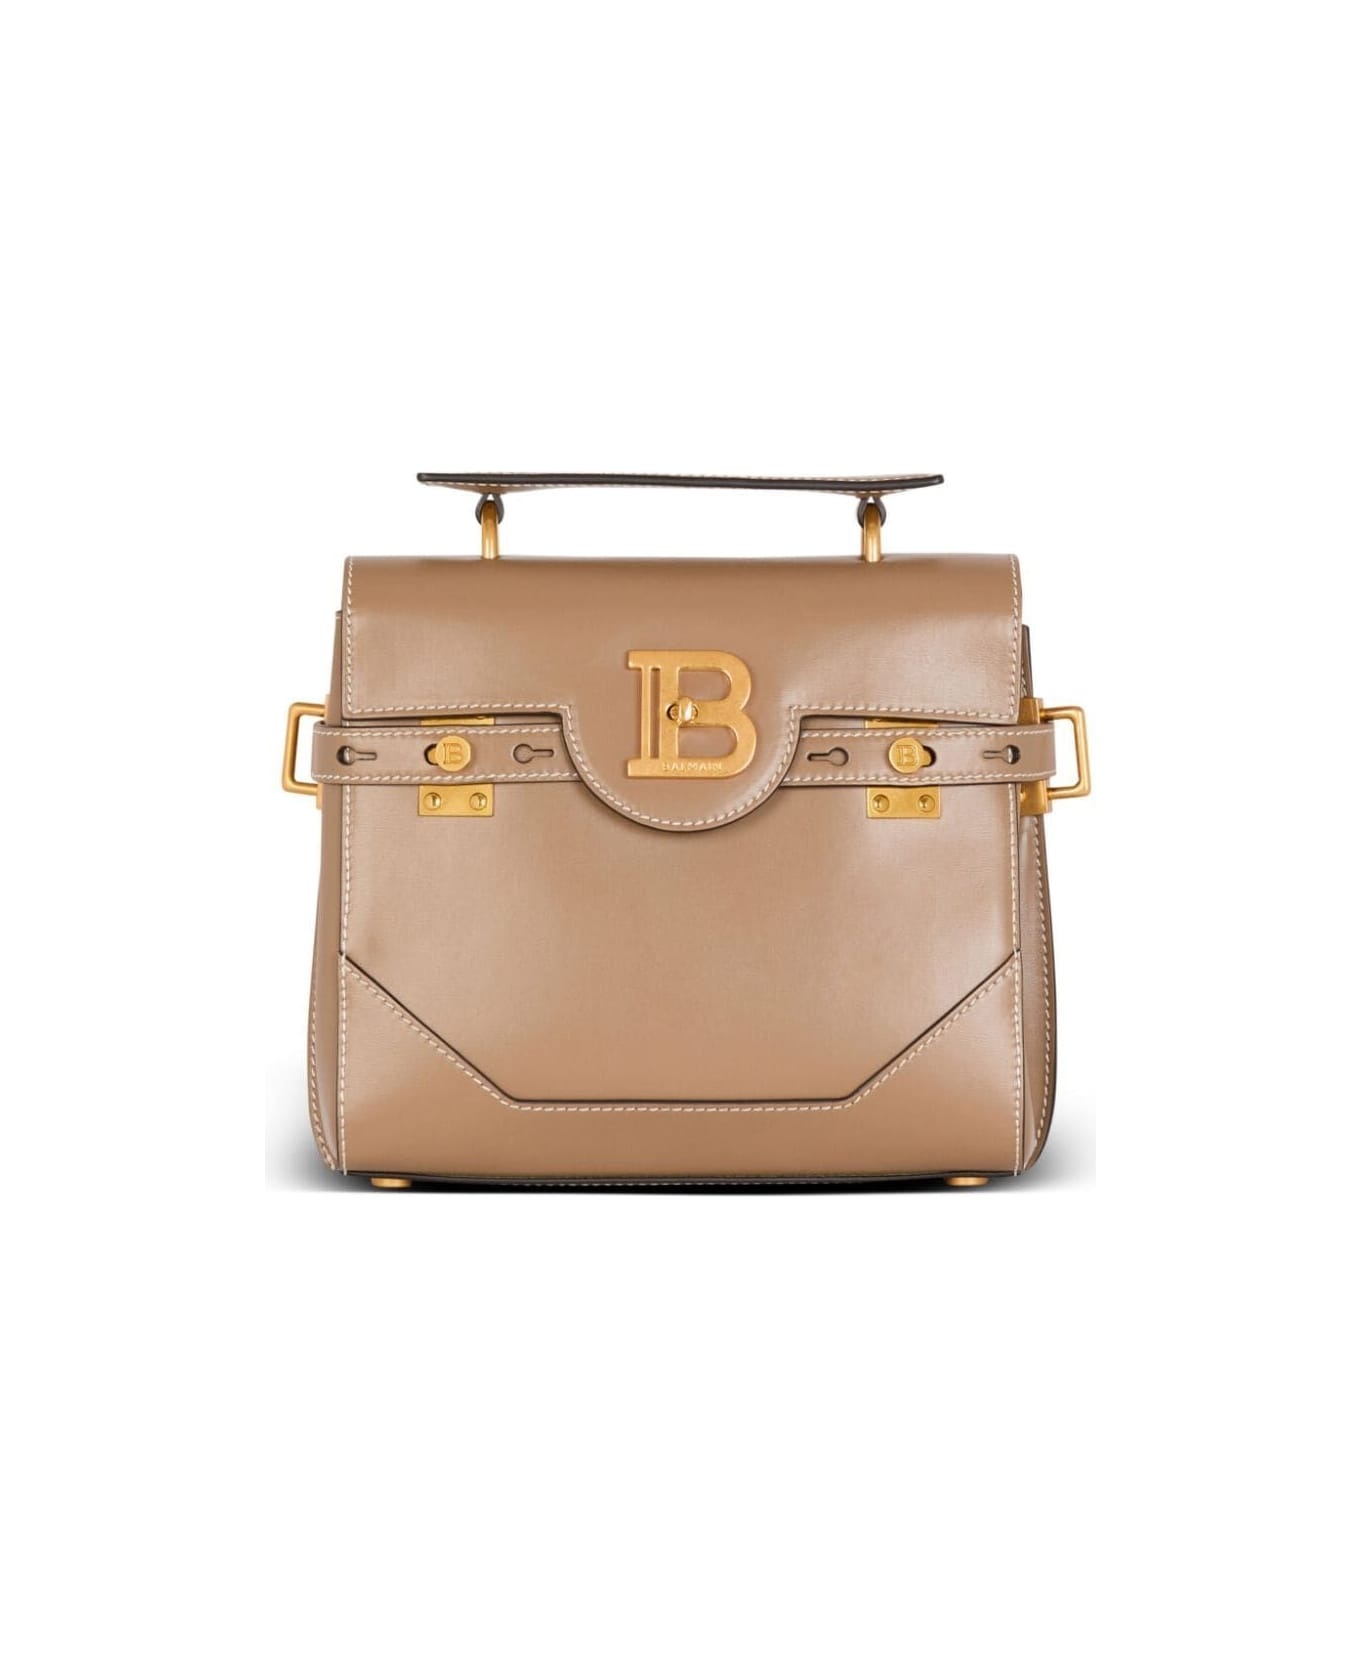 'b-buzz 23' Beige Leather Bag - 1